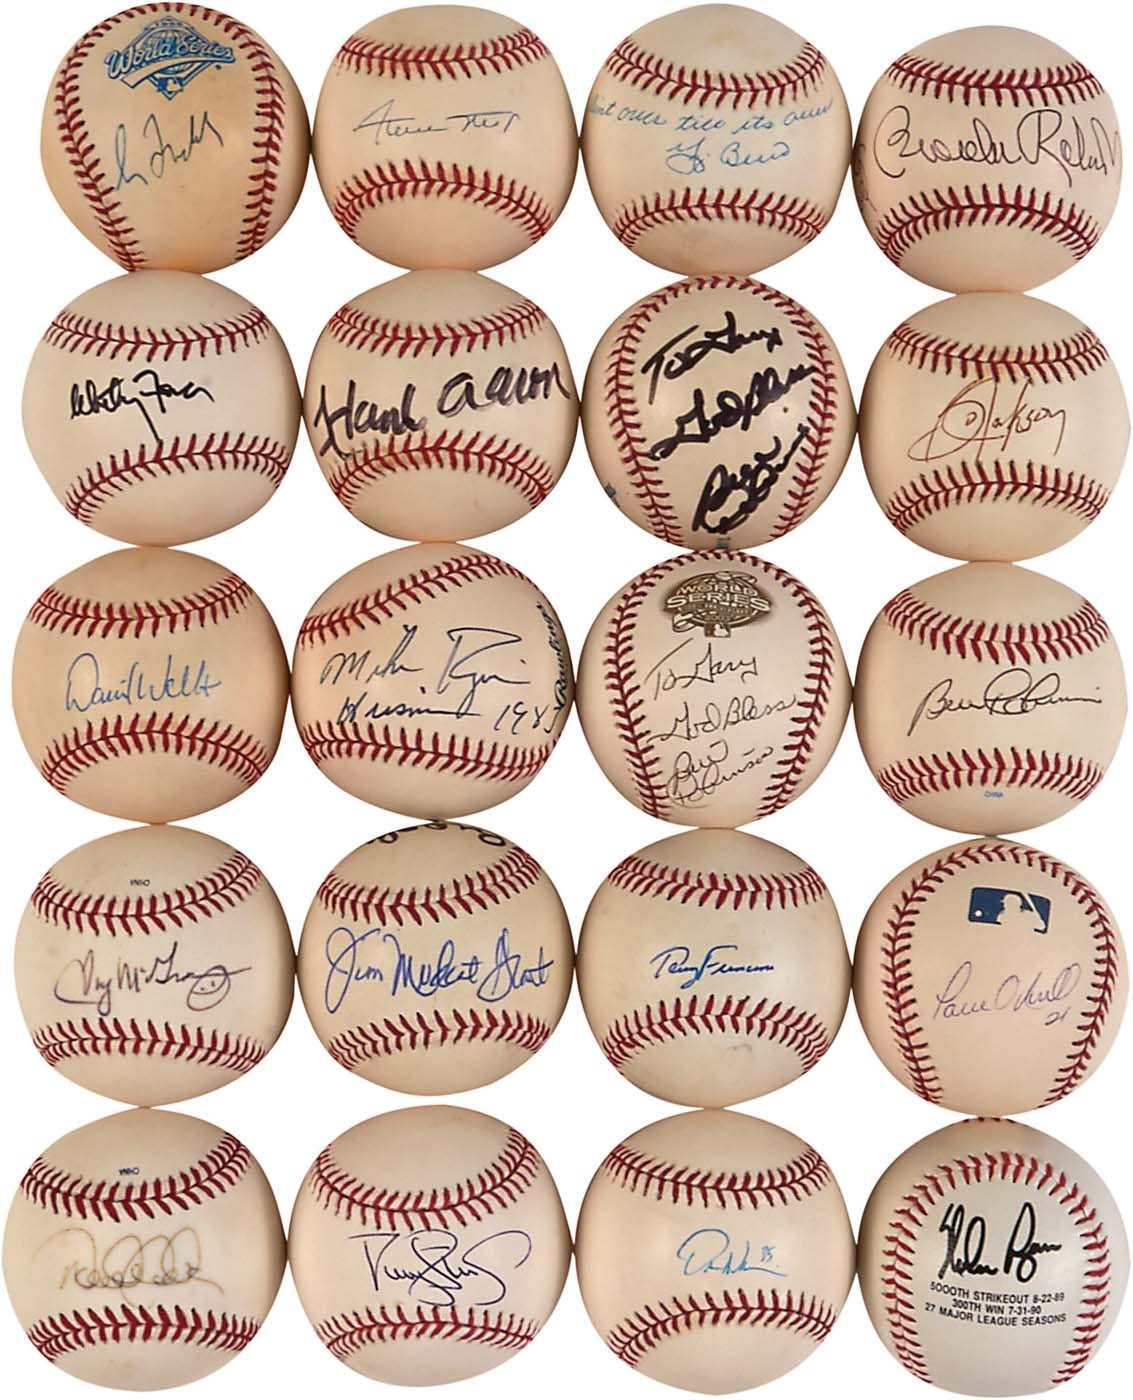 Baseball Legends and Stars Signed Baseballs & Bats w/Derek Jeter (25)